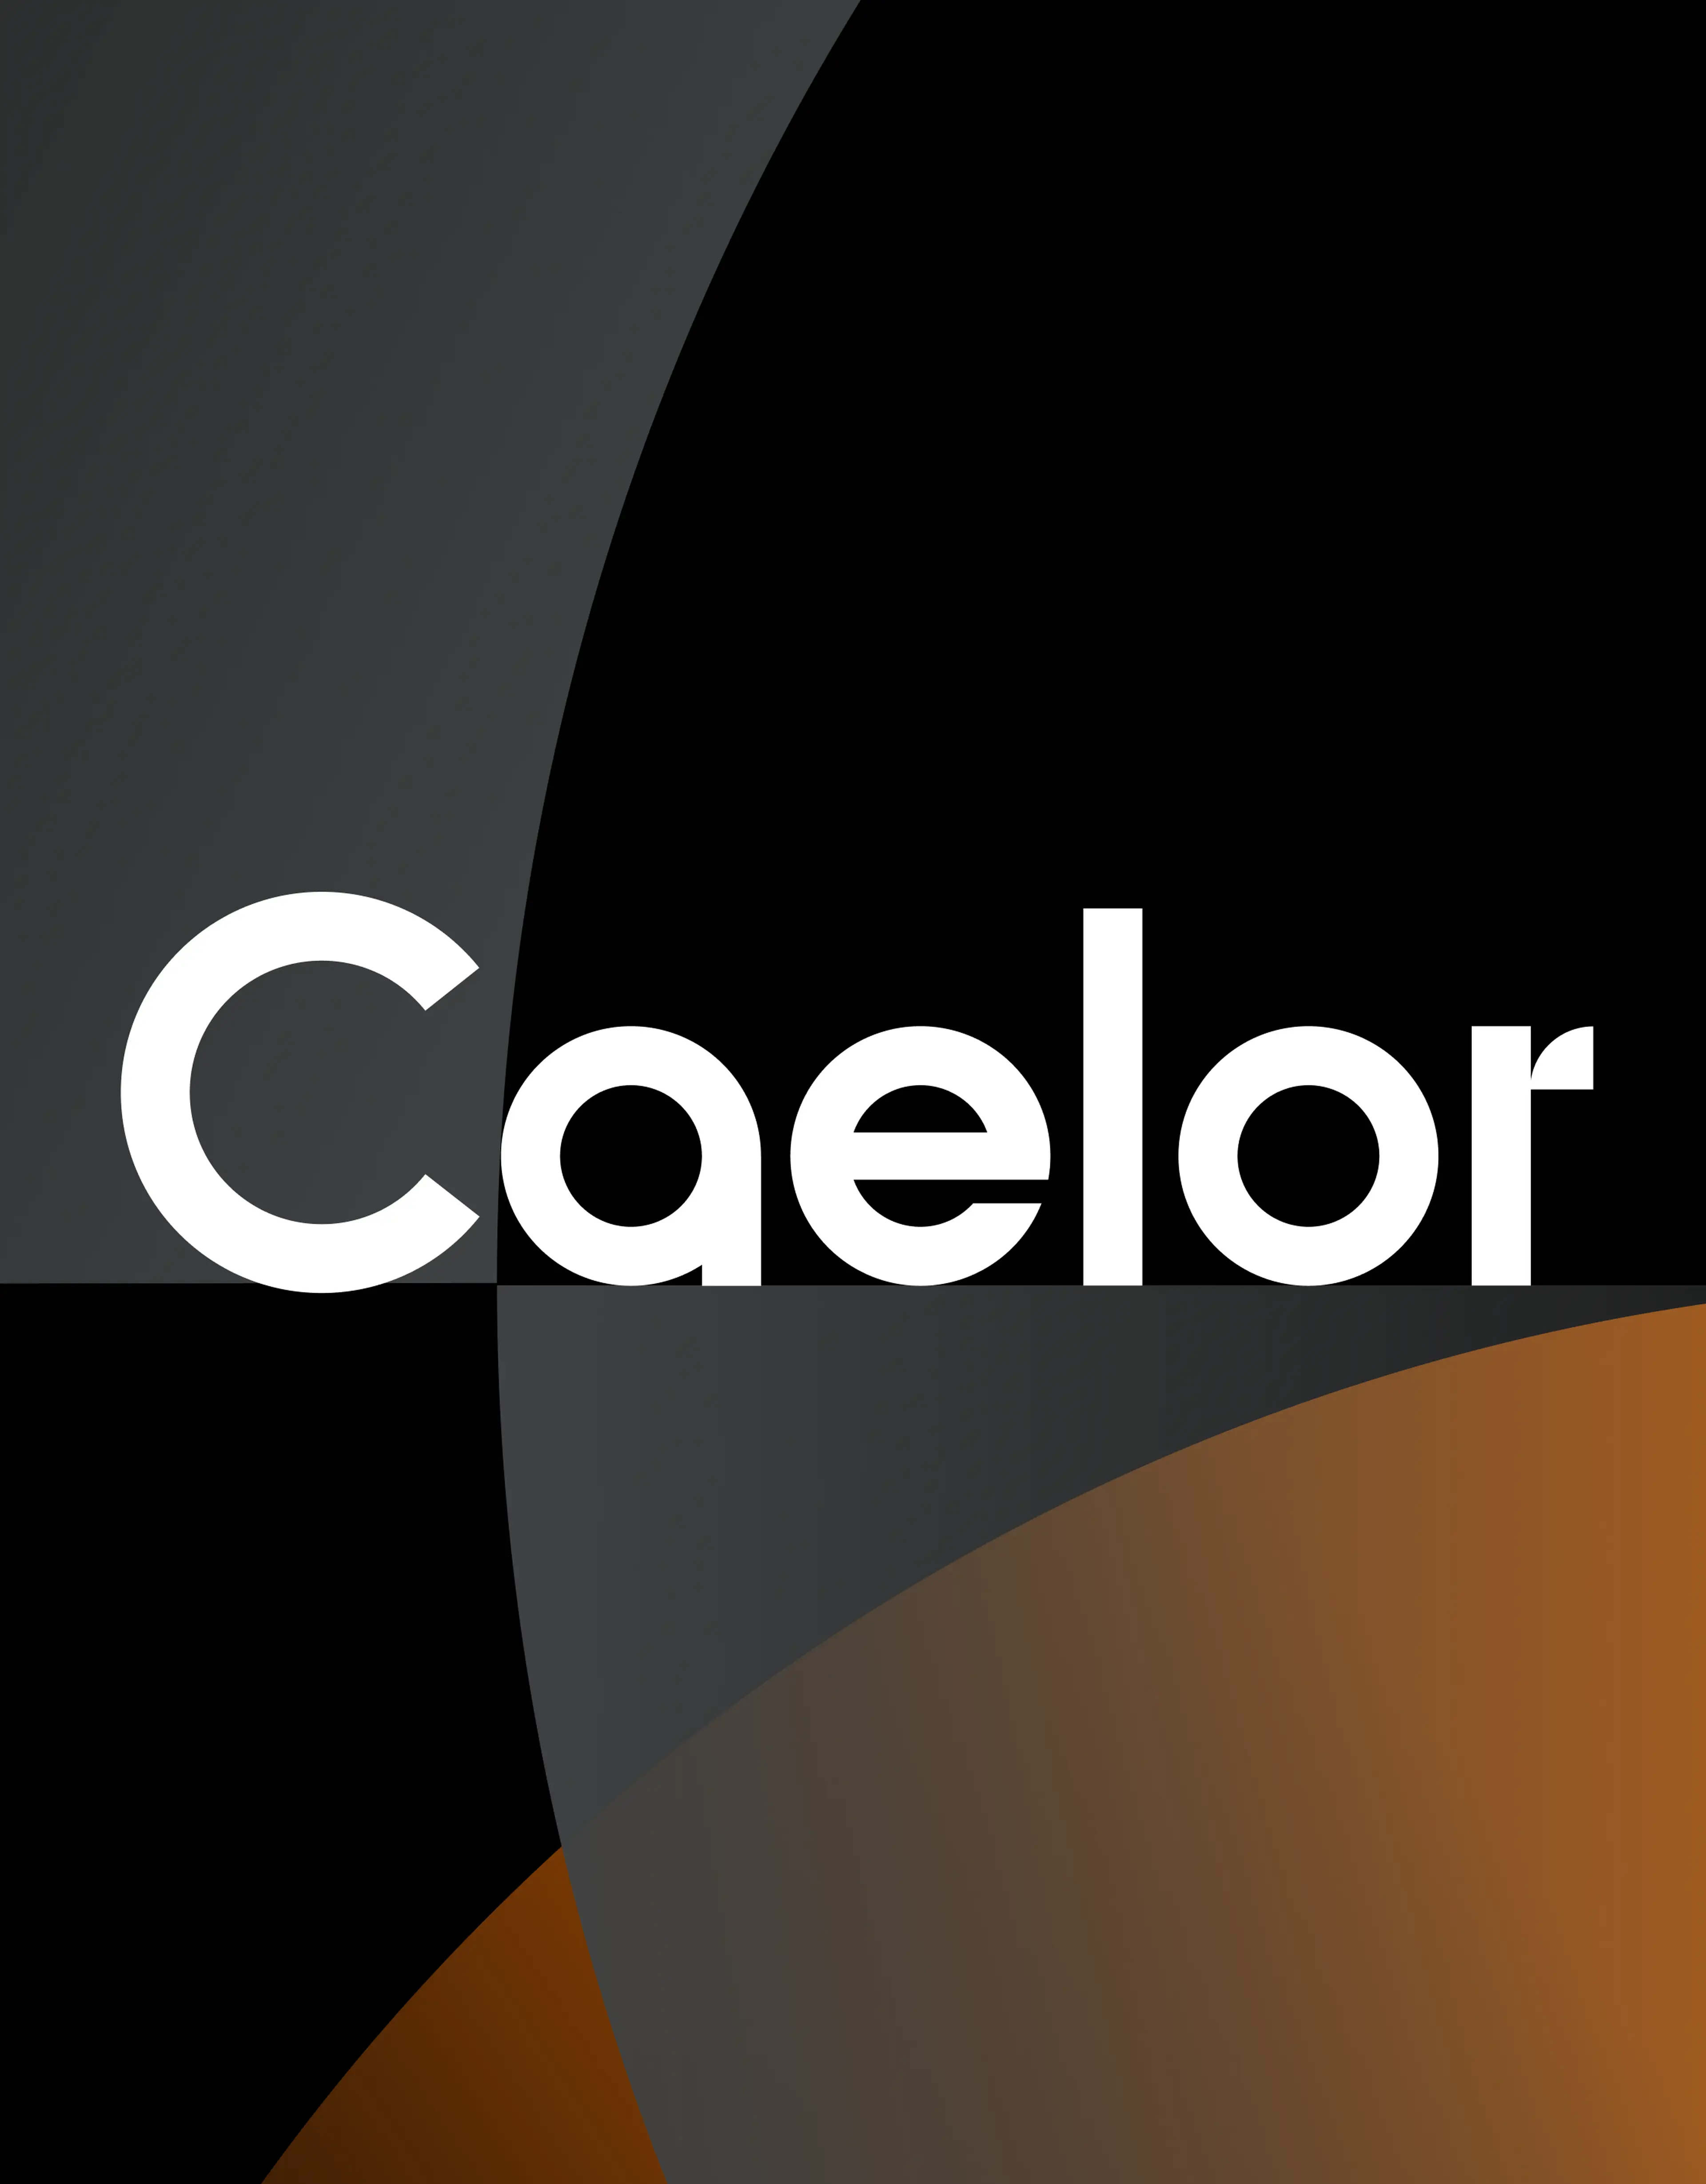 Caelor wordmark on black background